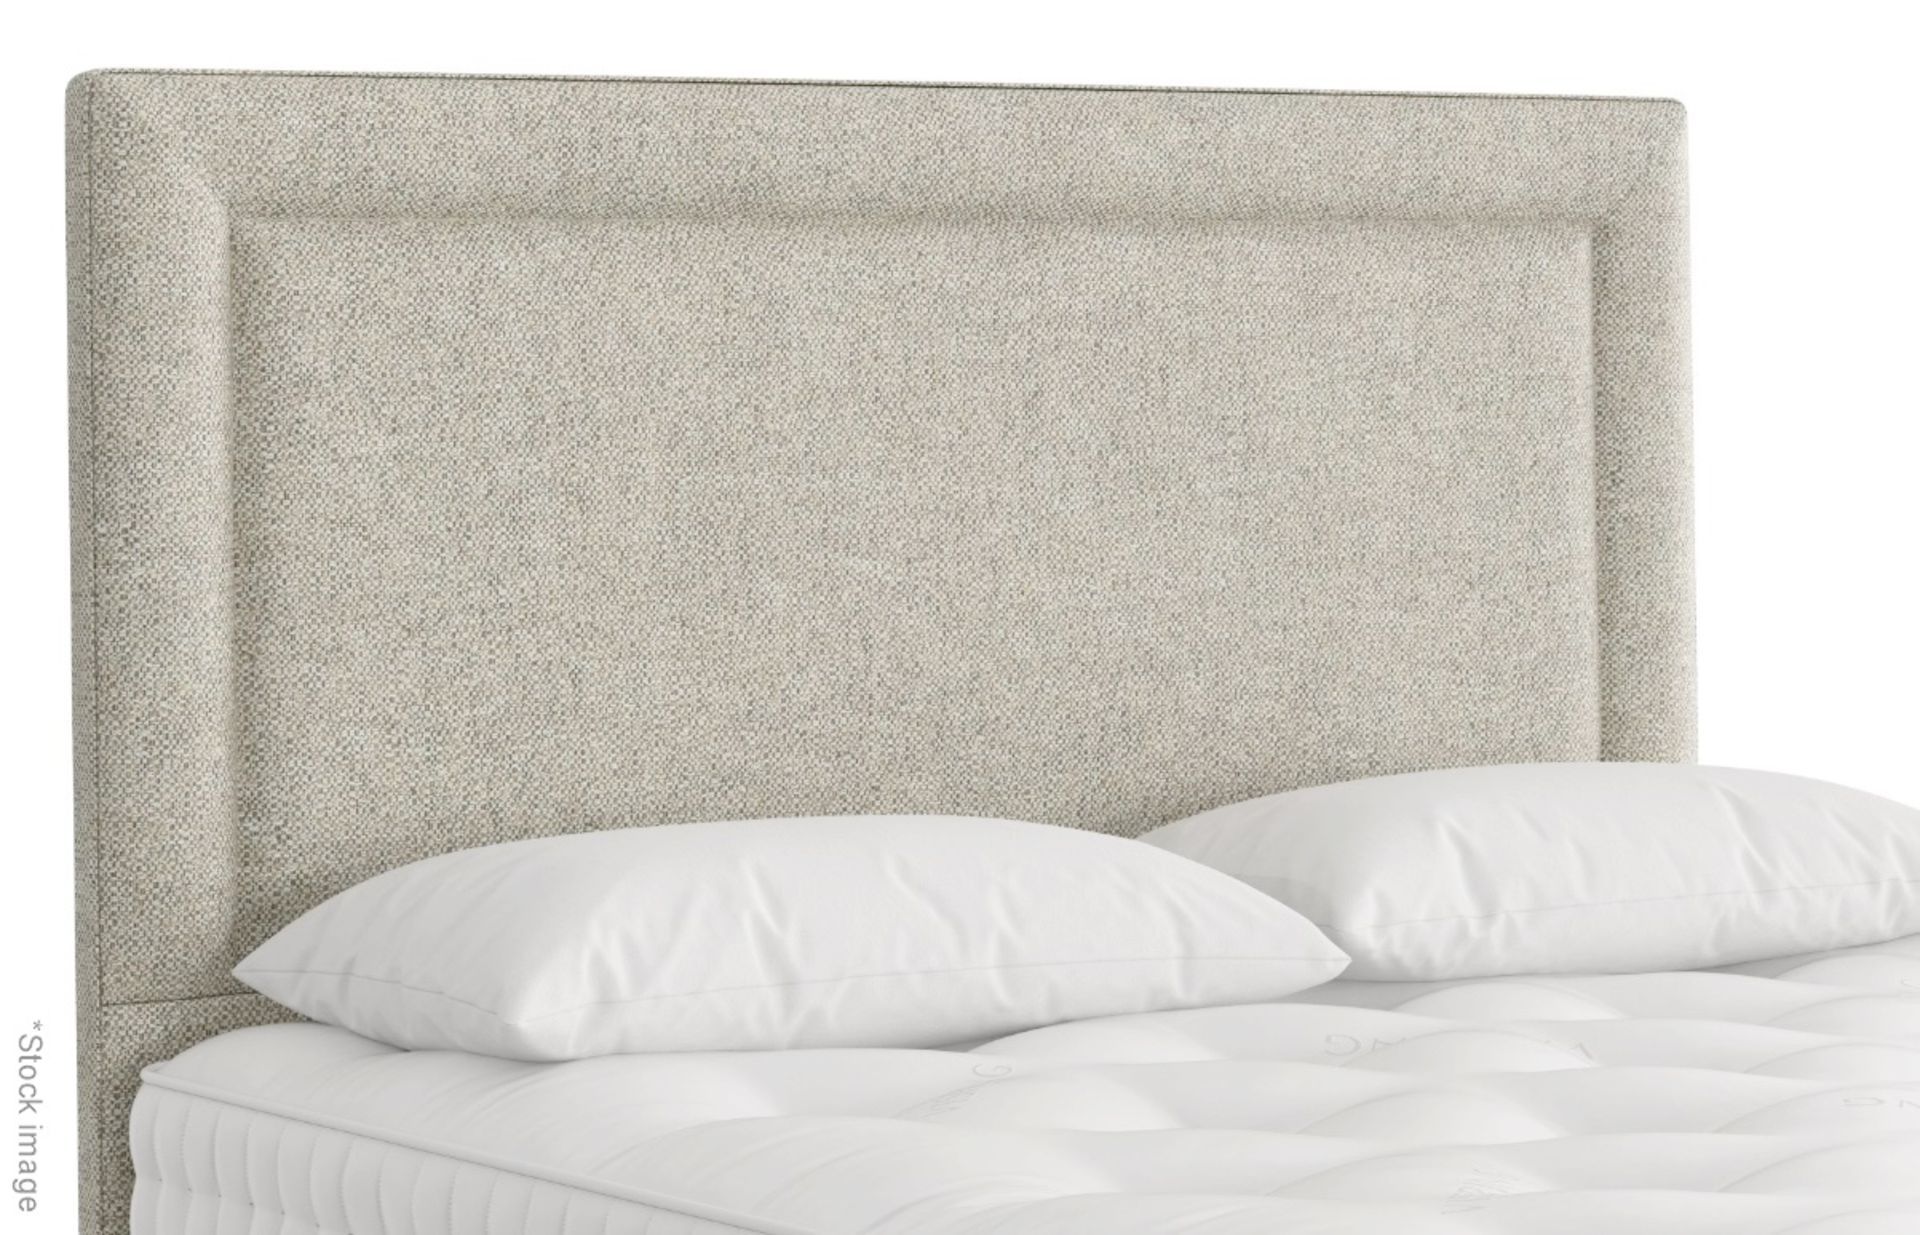 1 x VISPRING 'Helios' Luxury Upholstered Superking Headboard In a Premium Neutral Toned Fabric